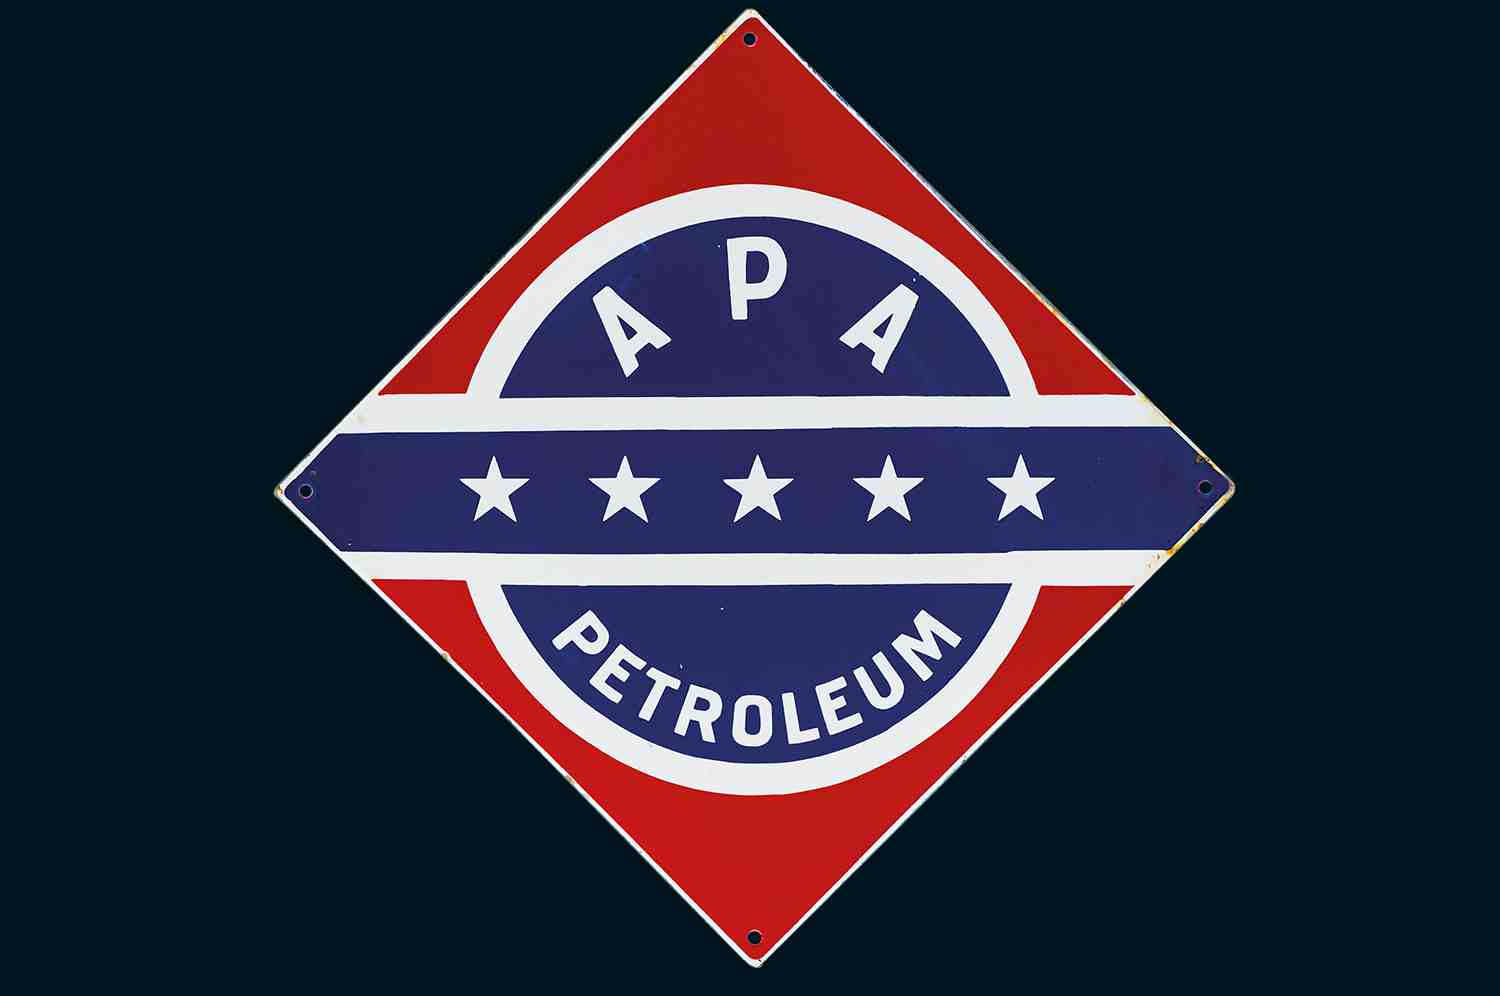 APA Petroleum 